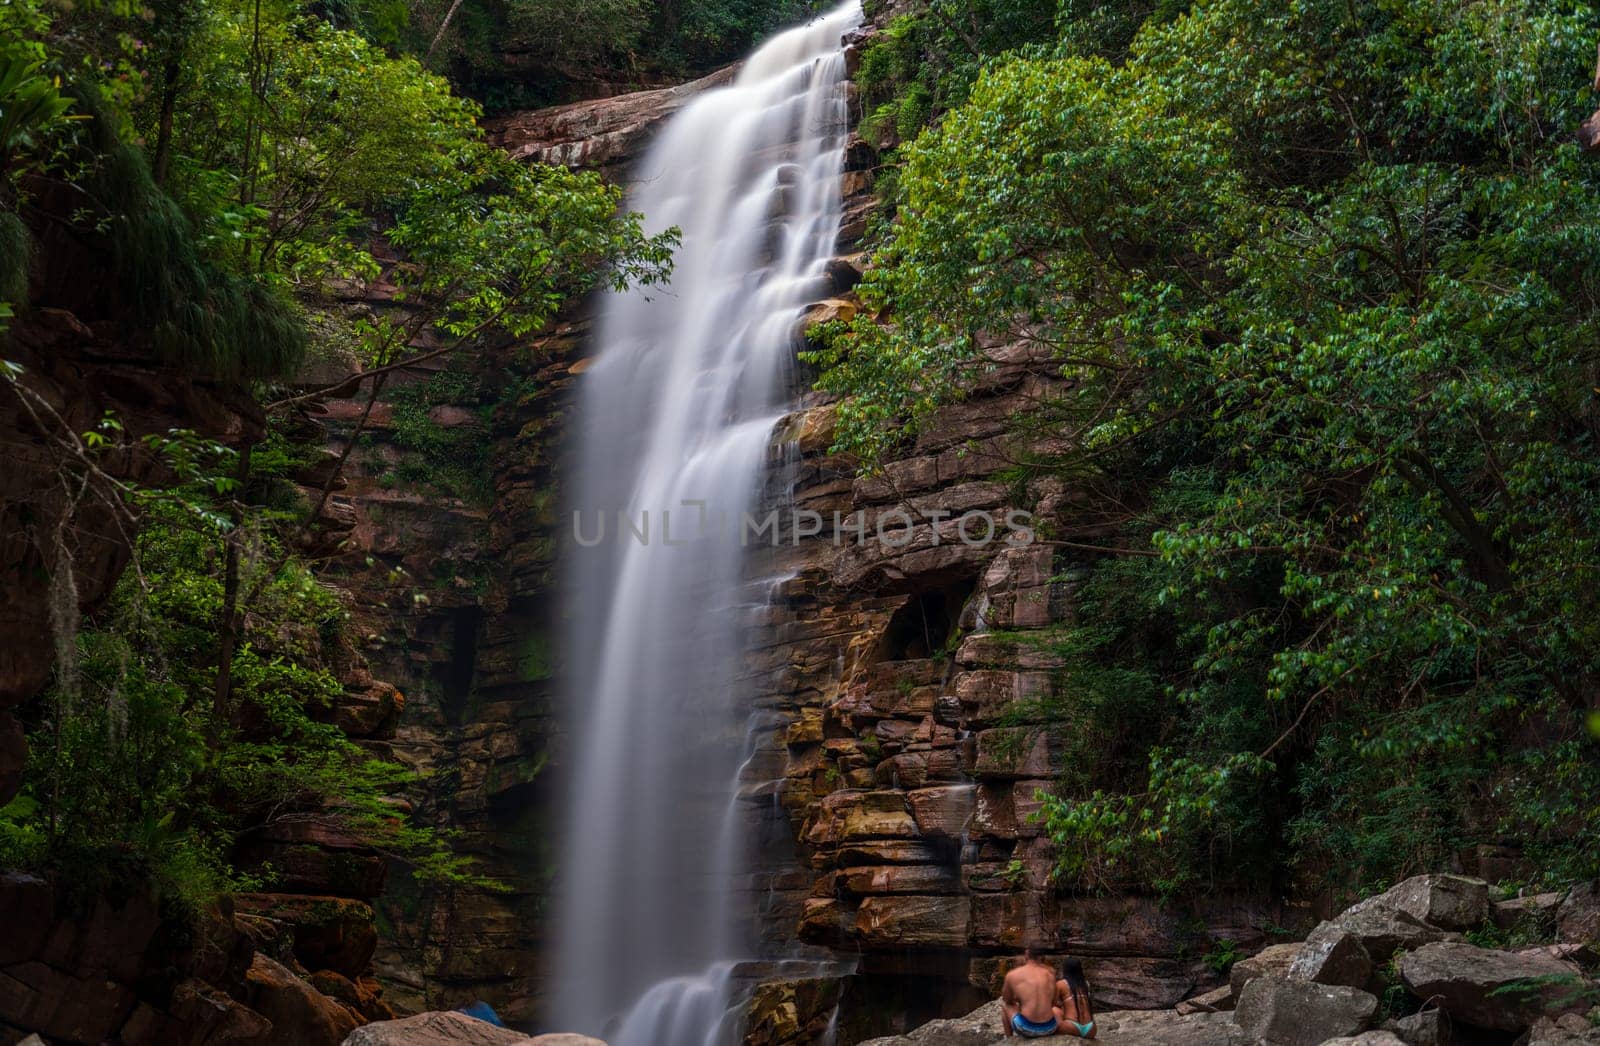 Unidentified Couple Enjoying Silky Waterfall in Lush Canyon by FerradalFCG